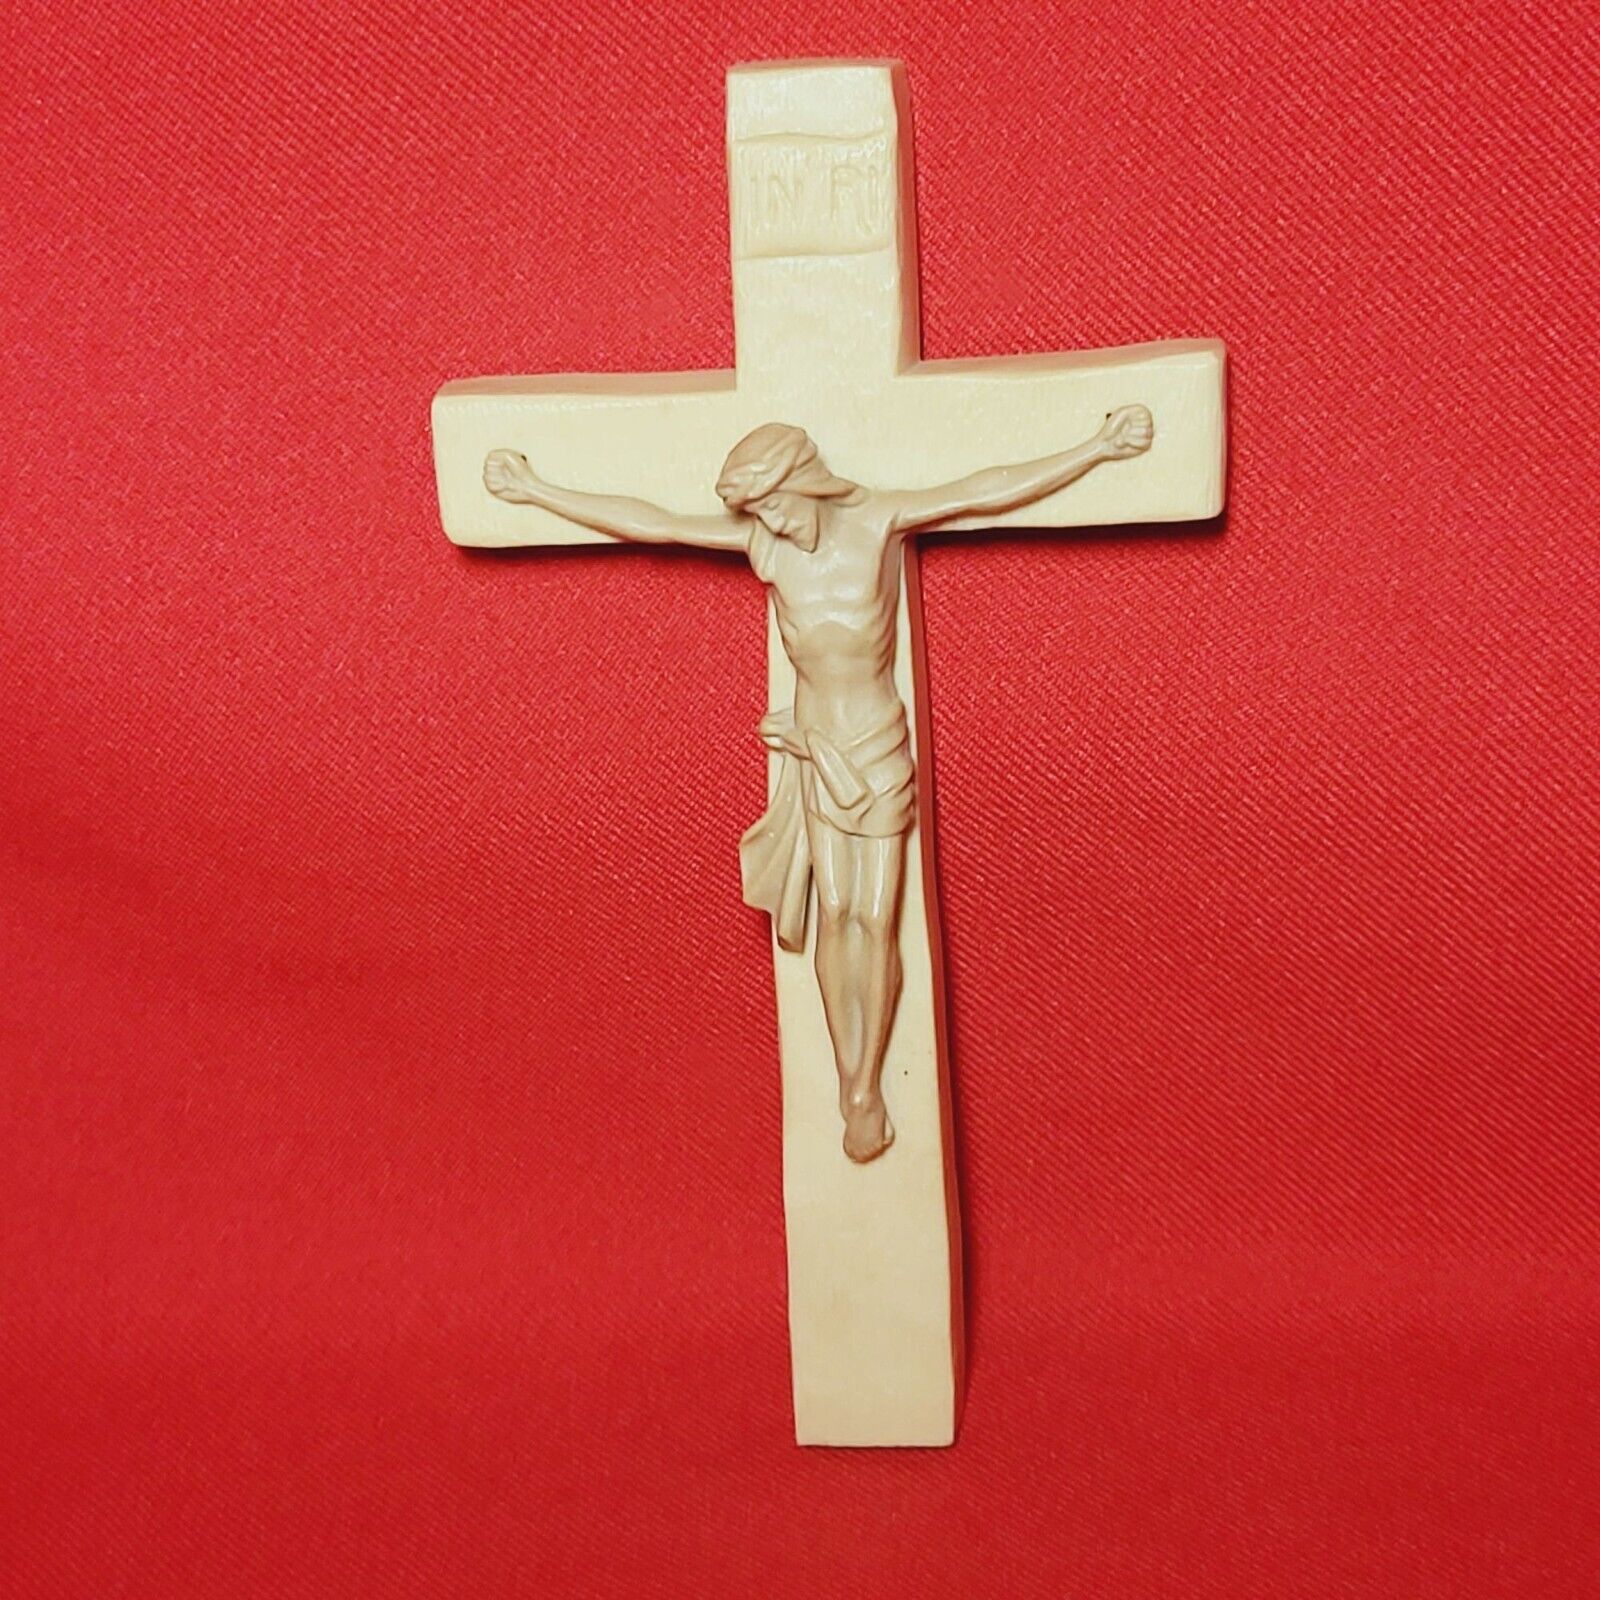 Crucifix Jesus on the Cross Wall Hanging Decor